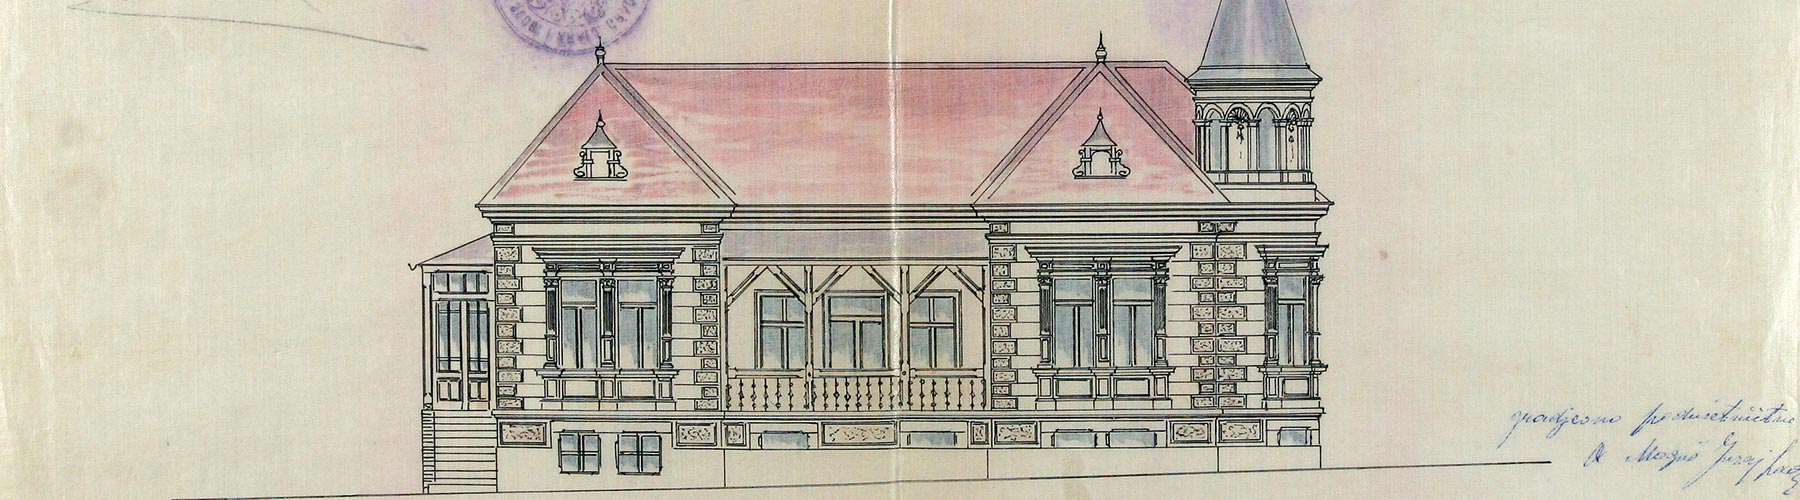 Gradsko poglavarstvo Bjelovar - nacrti objekata 1881. - 1940